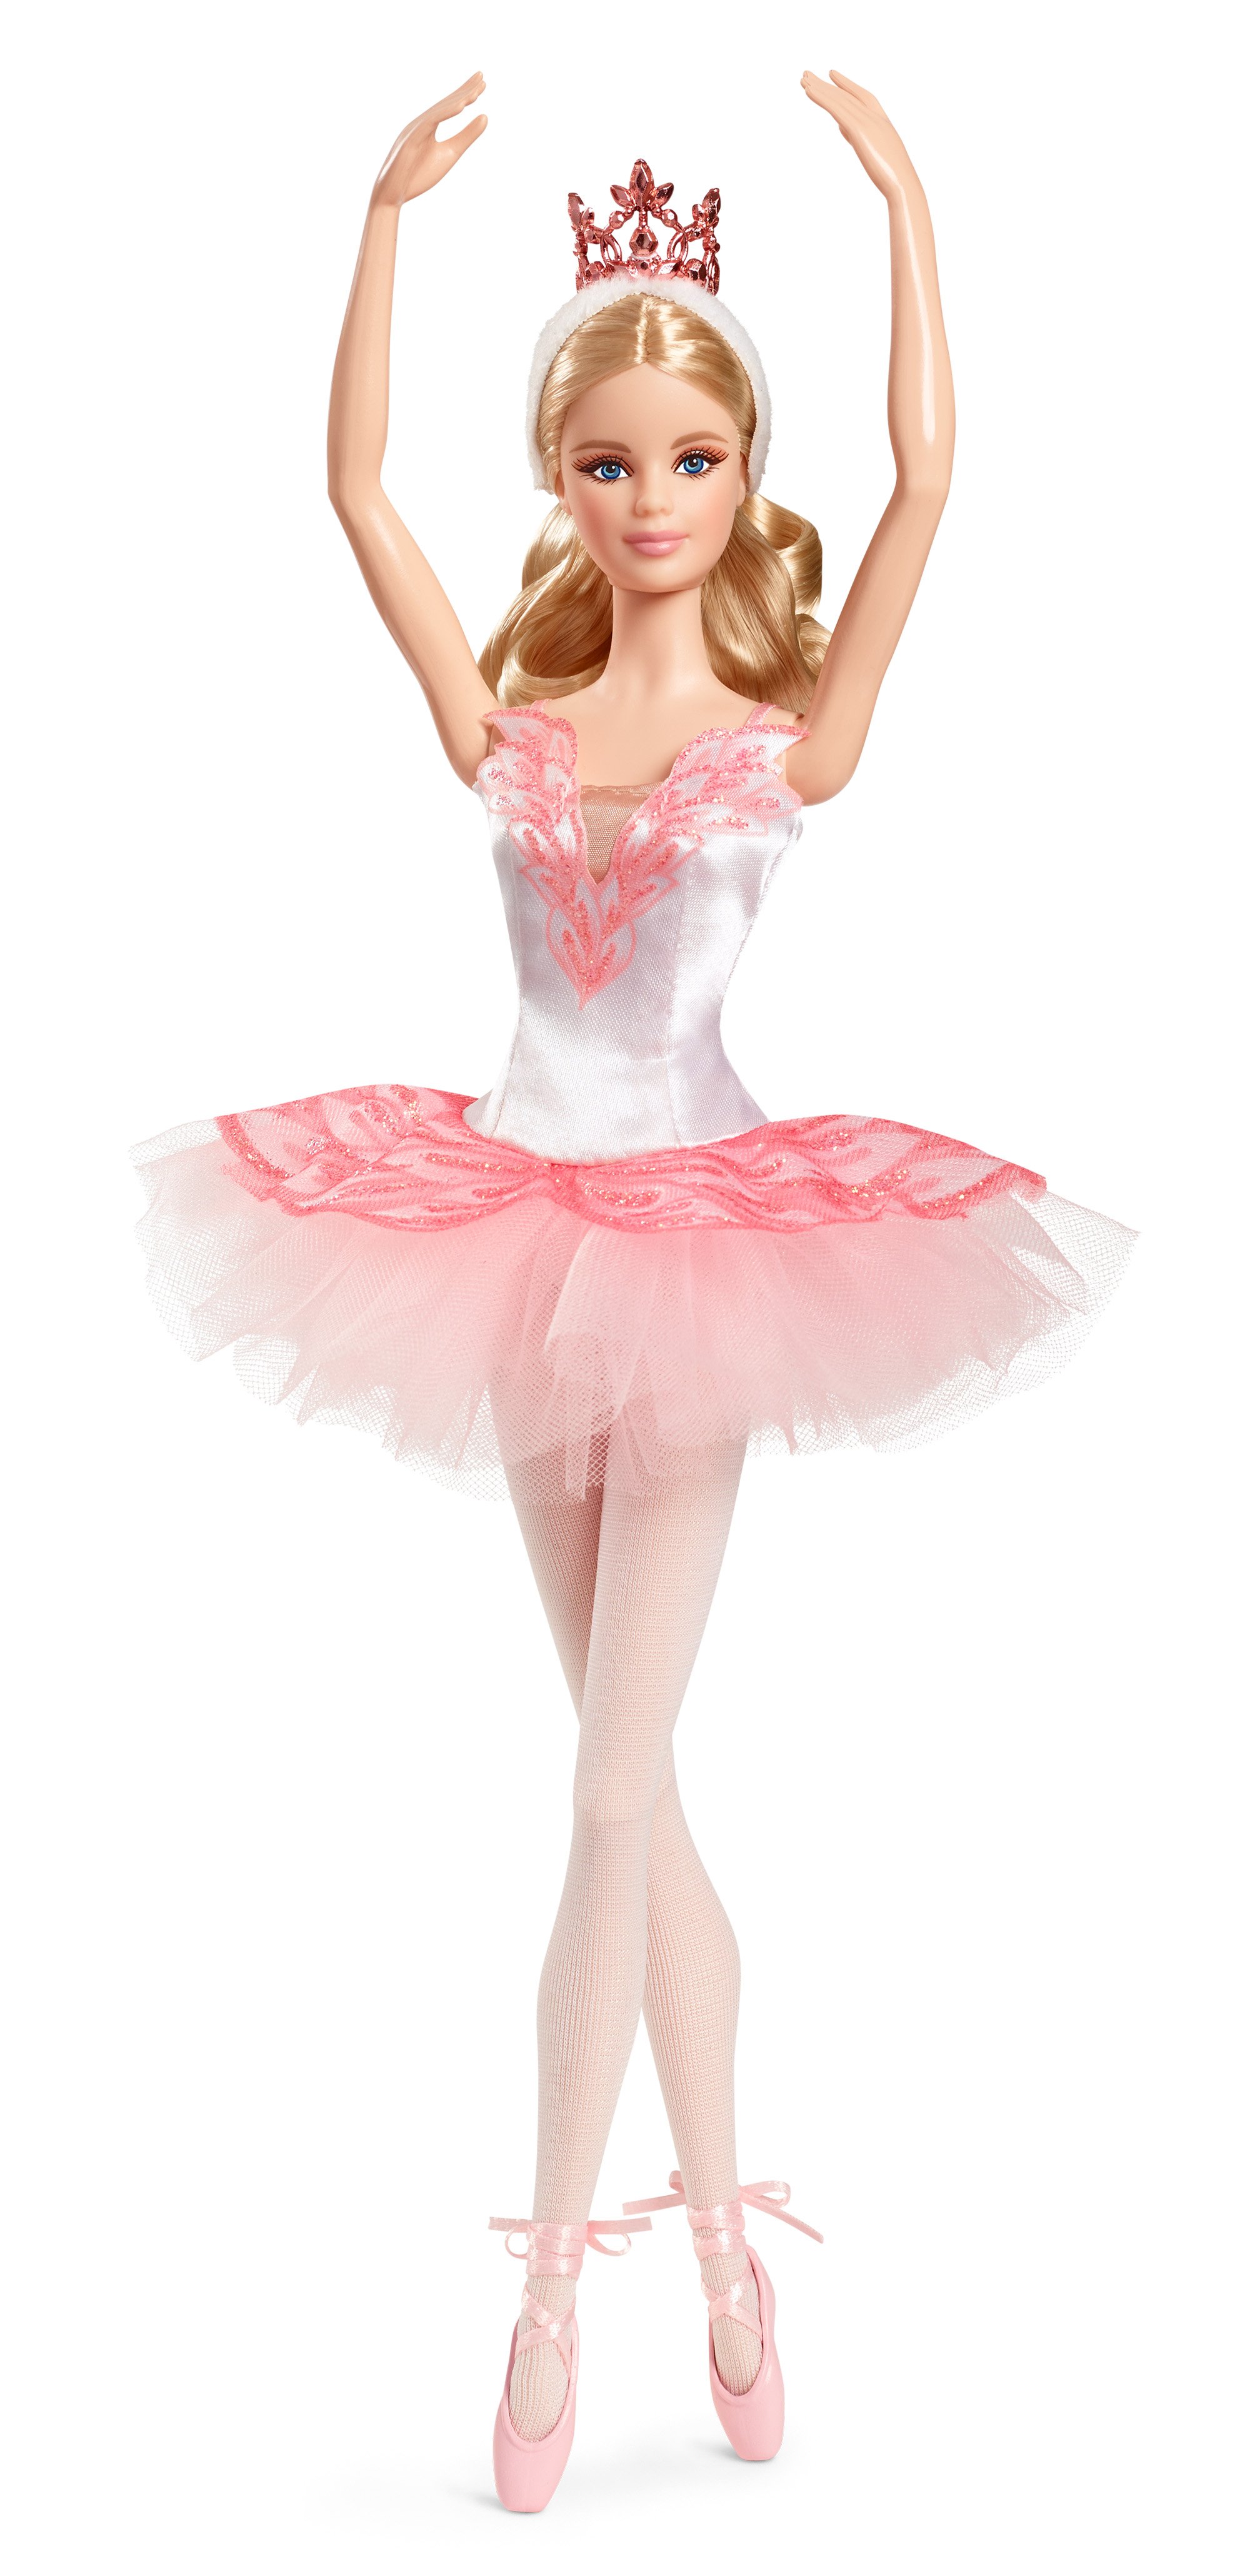 Barbie -  Ballet Wishes